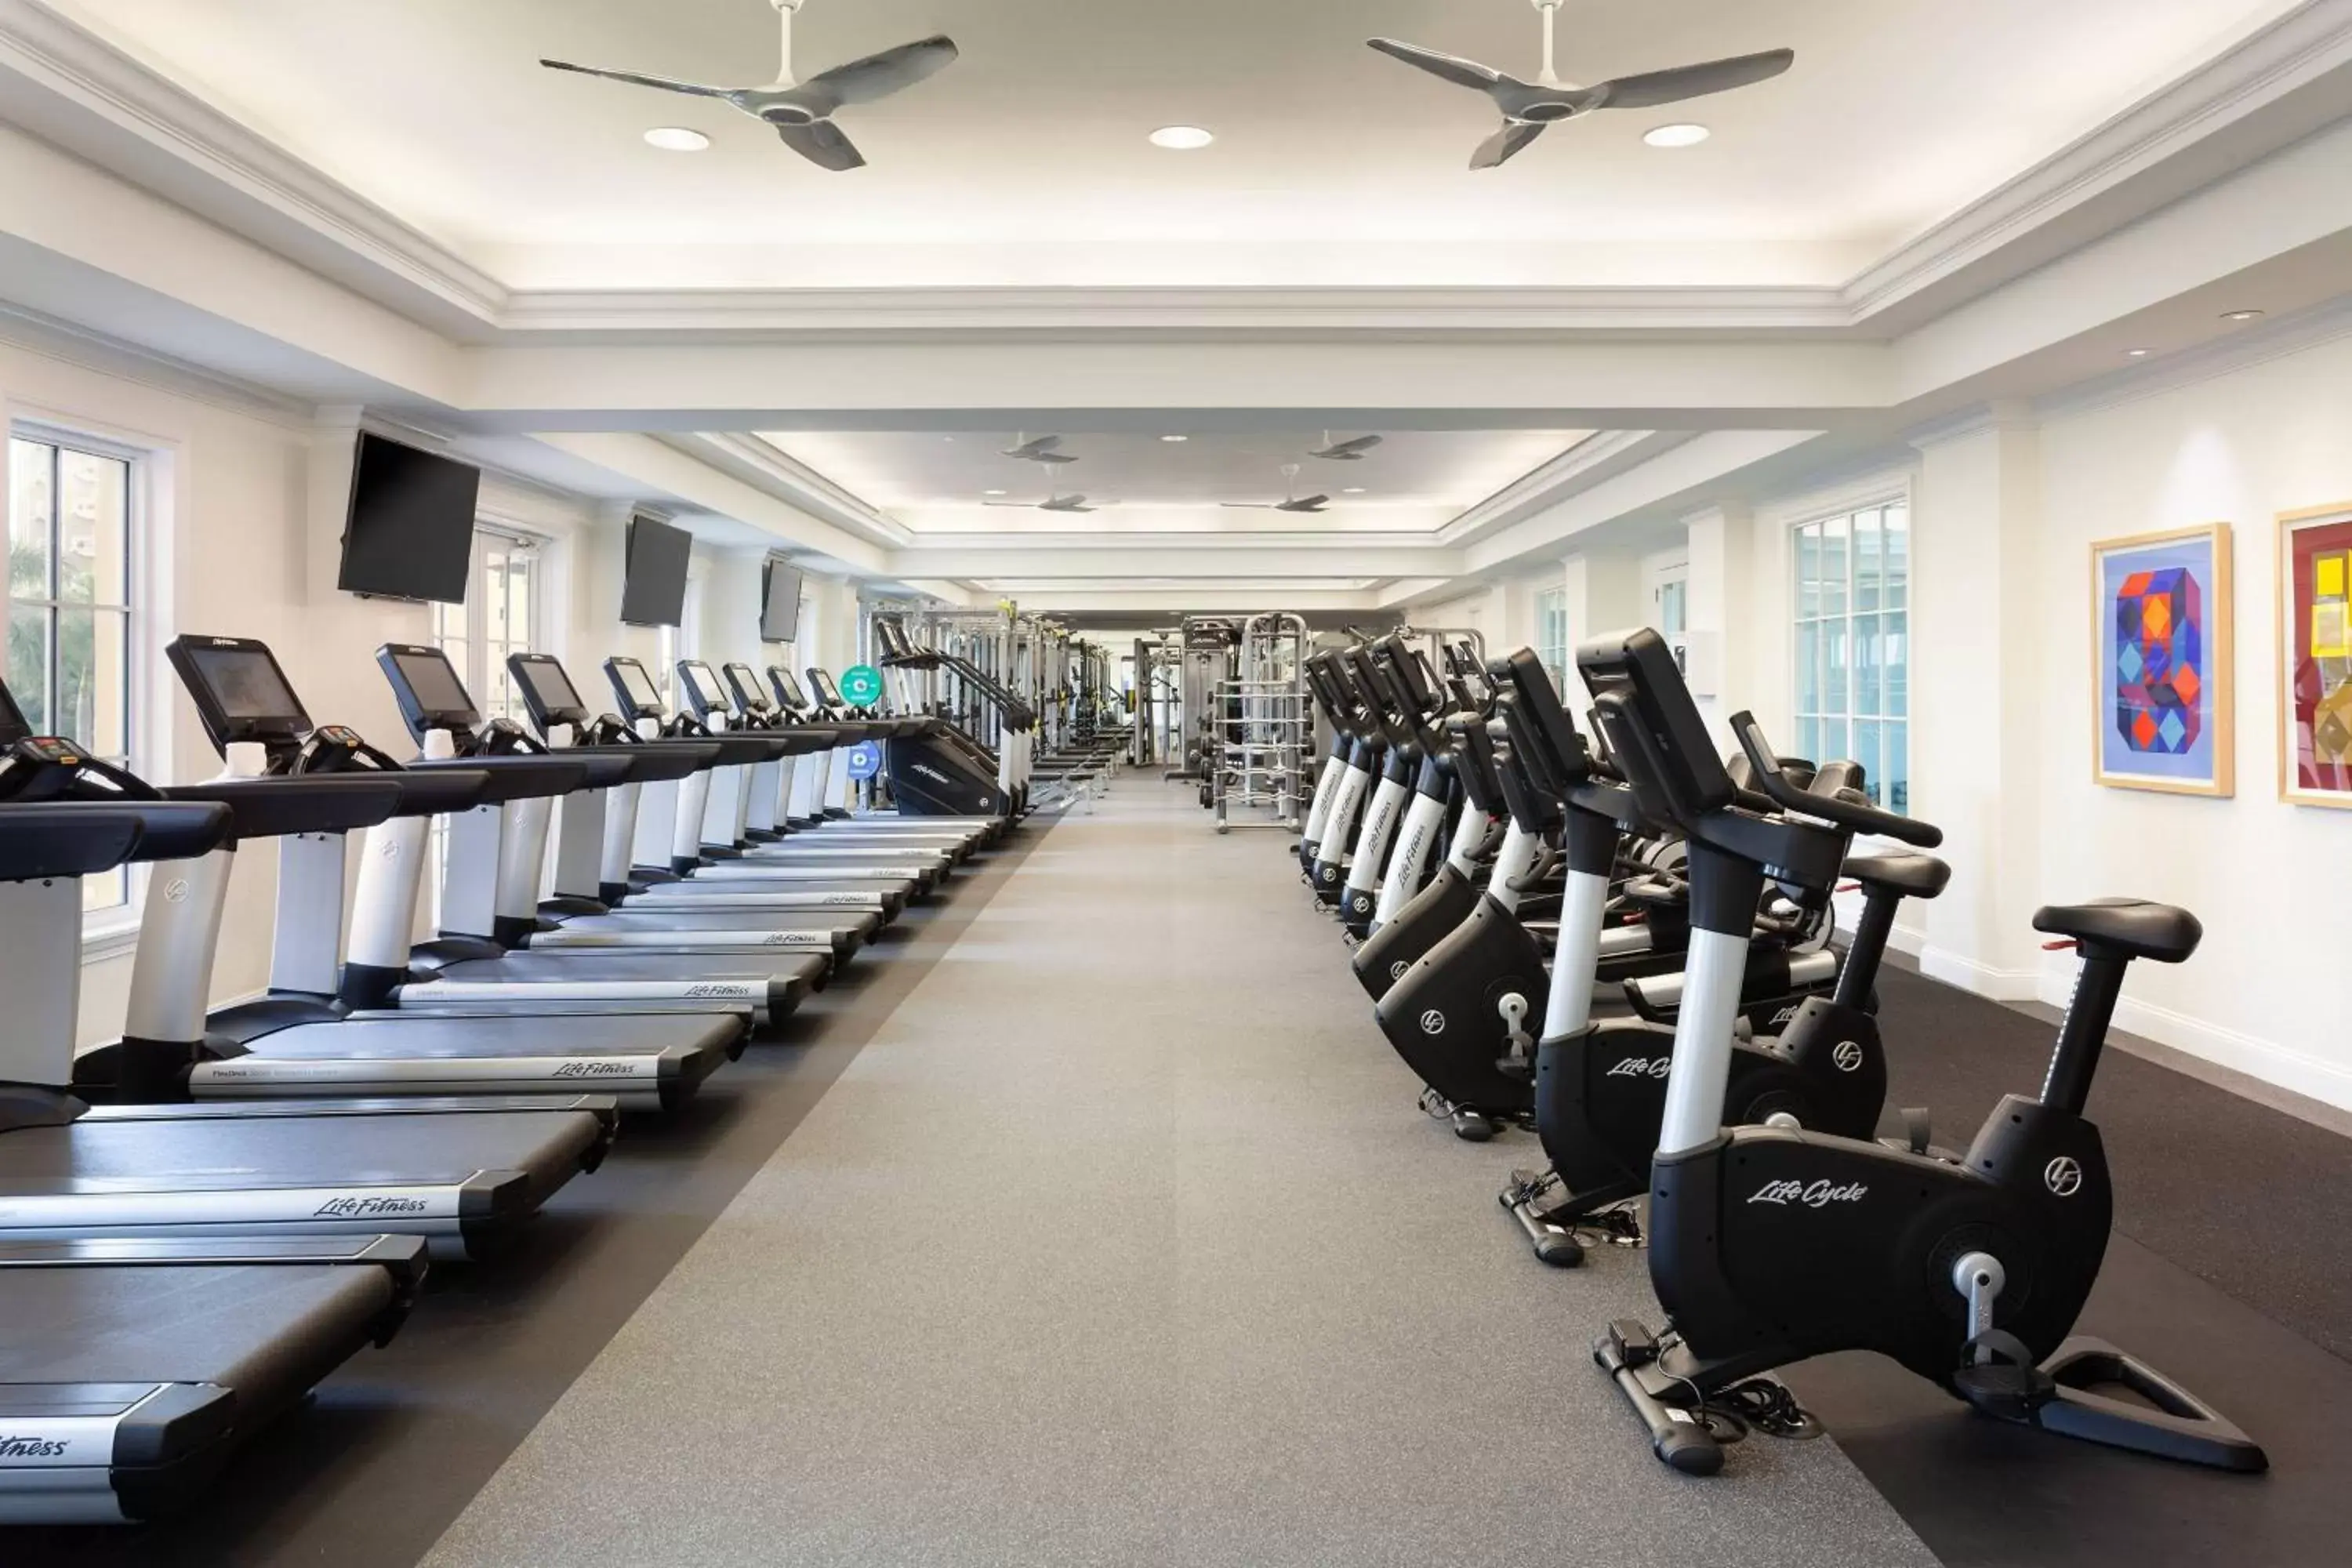 Fitness centre/facilities, Fitness Center/Facilities in JW Marriott Miami Turnberry Resort & Spa